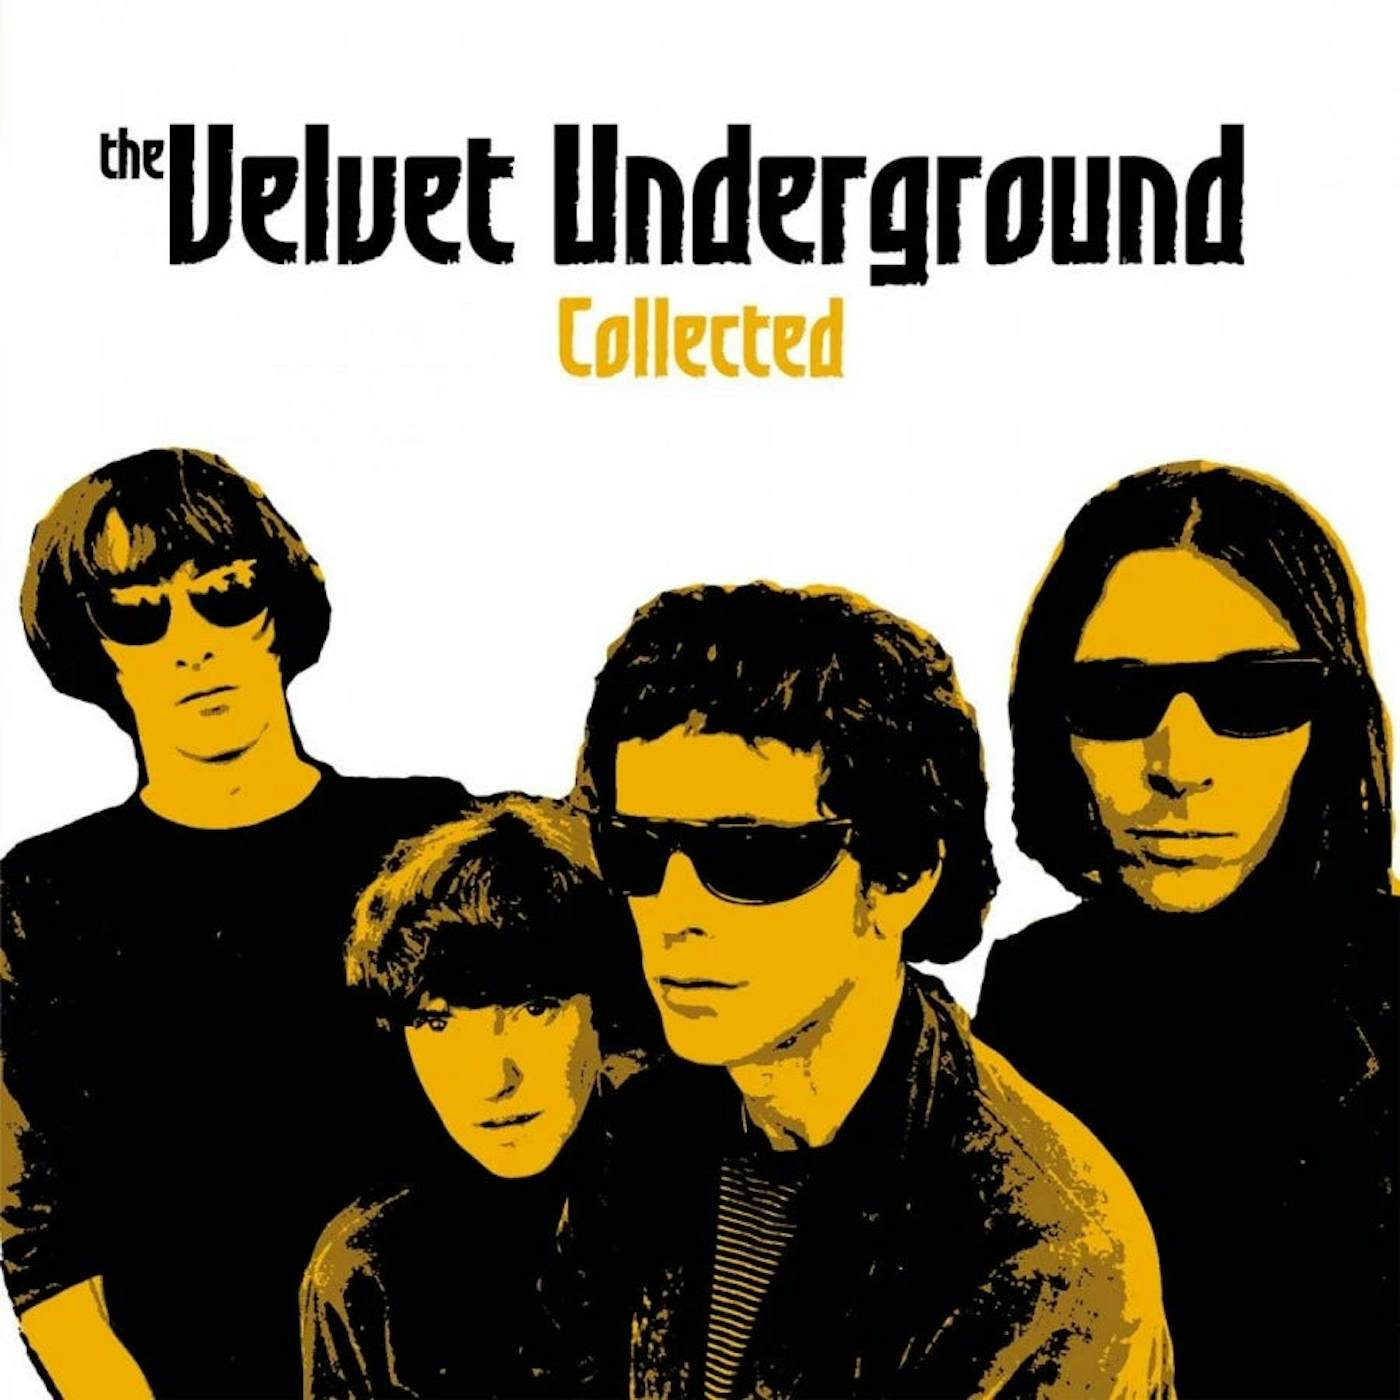 The Velvet Underground- Collected